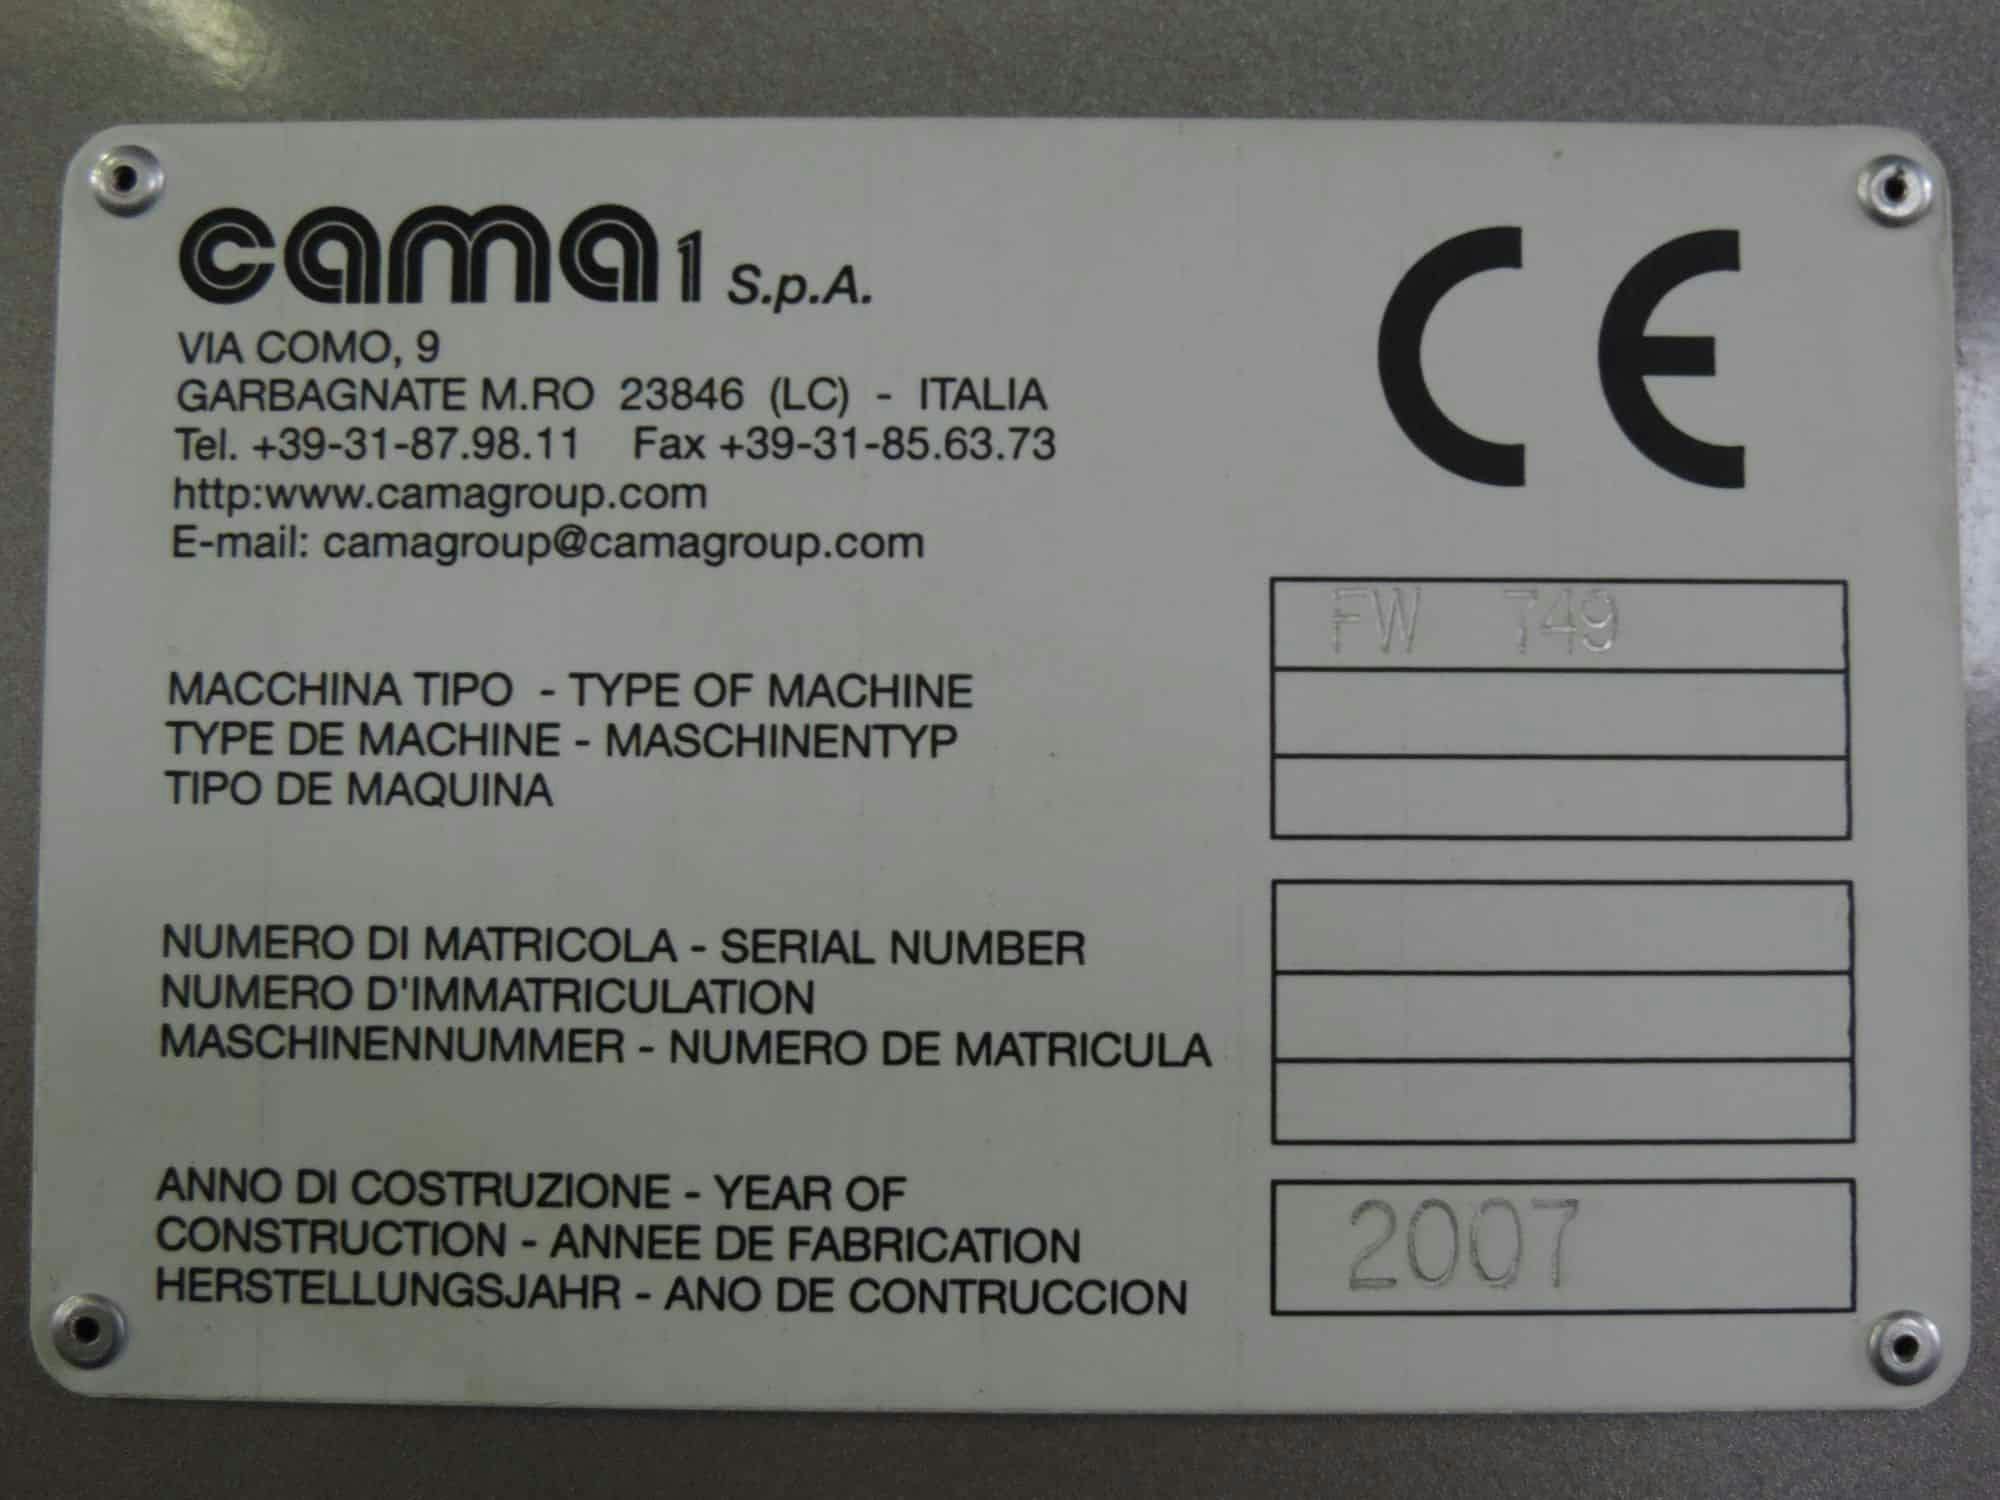 Nameplate of Cama Group FW 749 